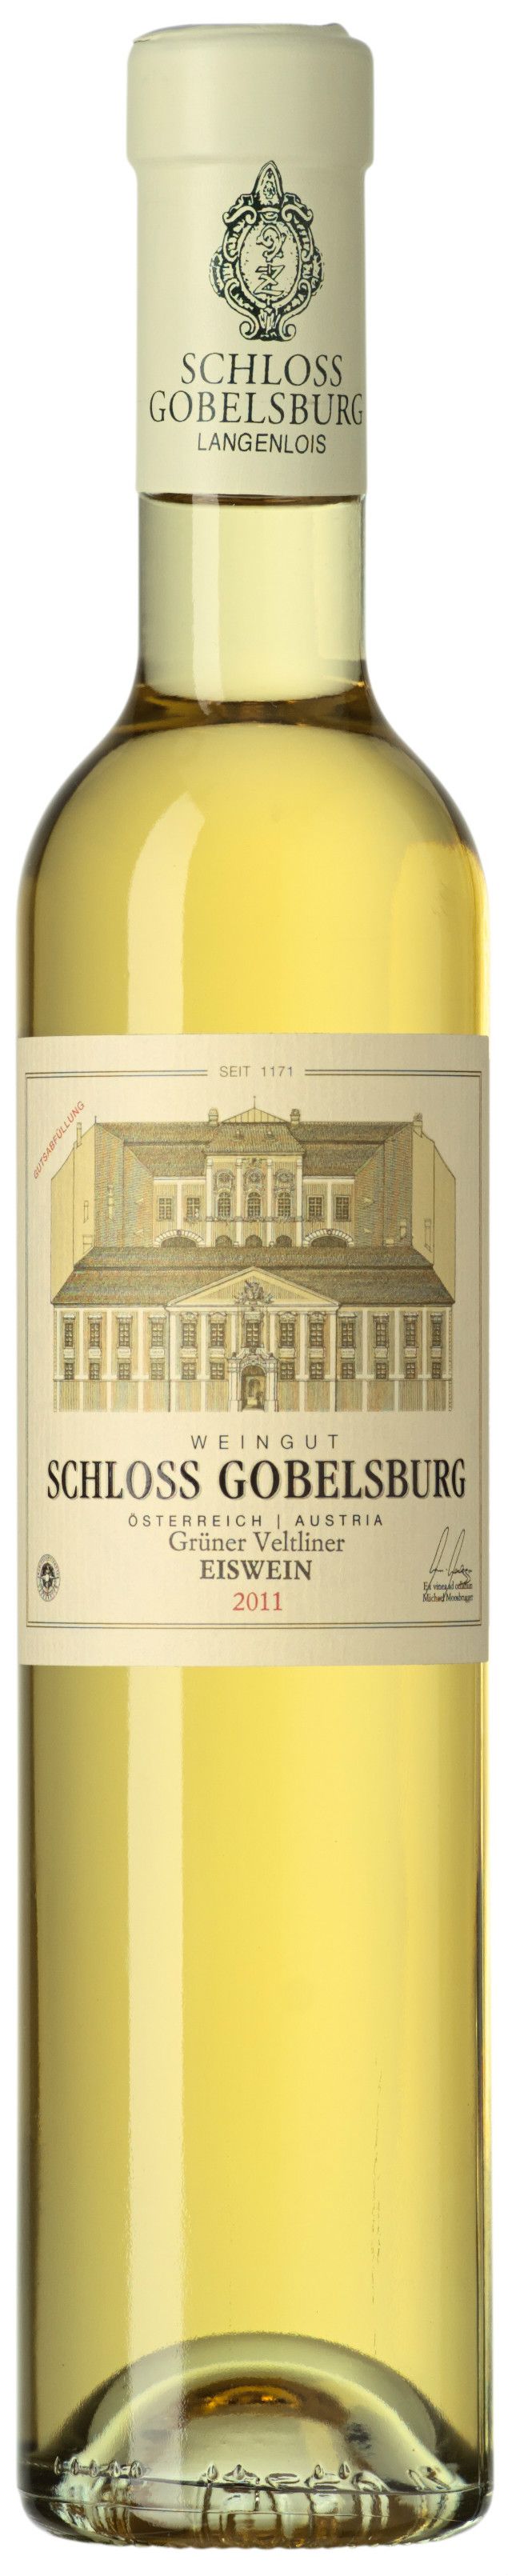 Schloss Gobelsburg, Gruner Veltliner Eiswein, 2011